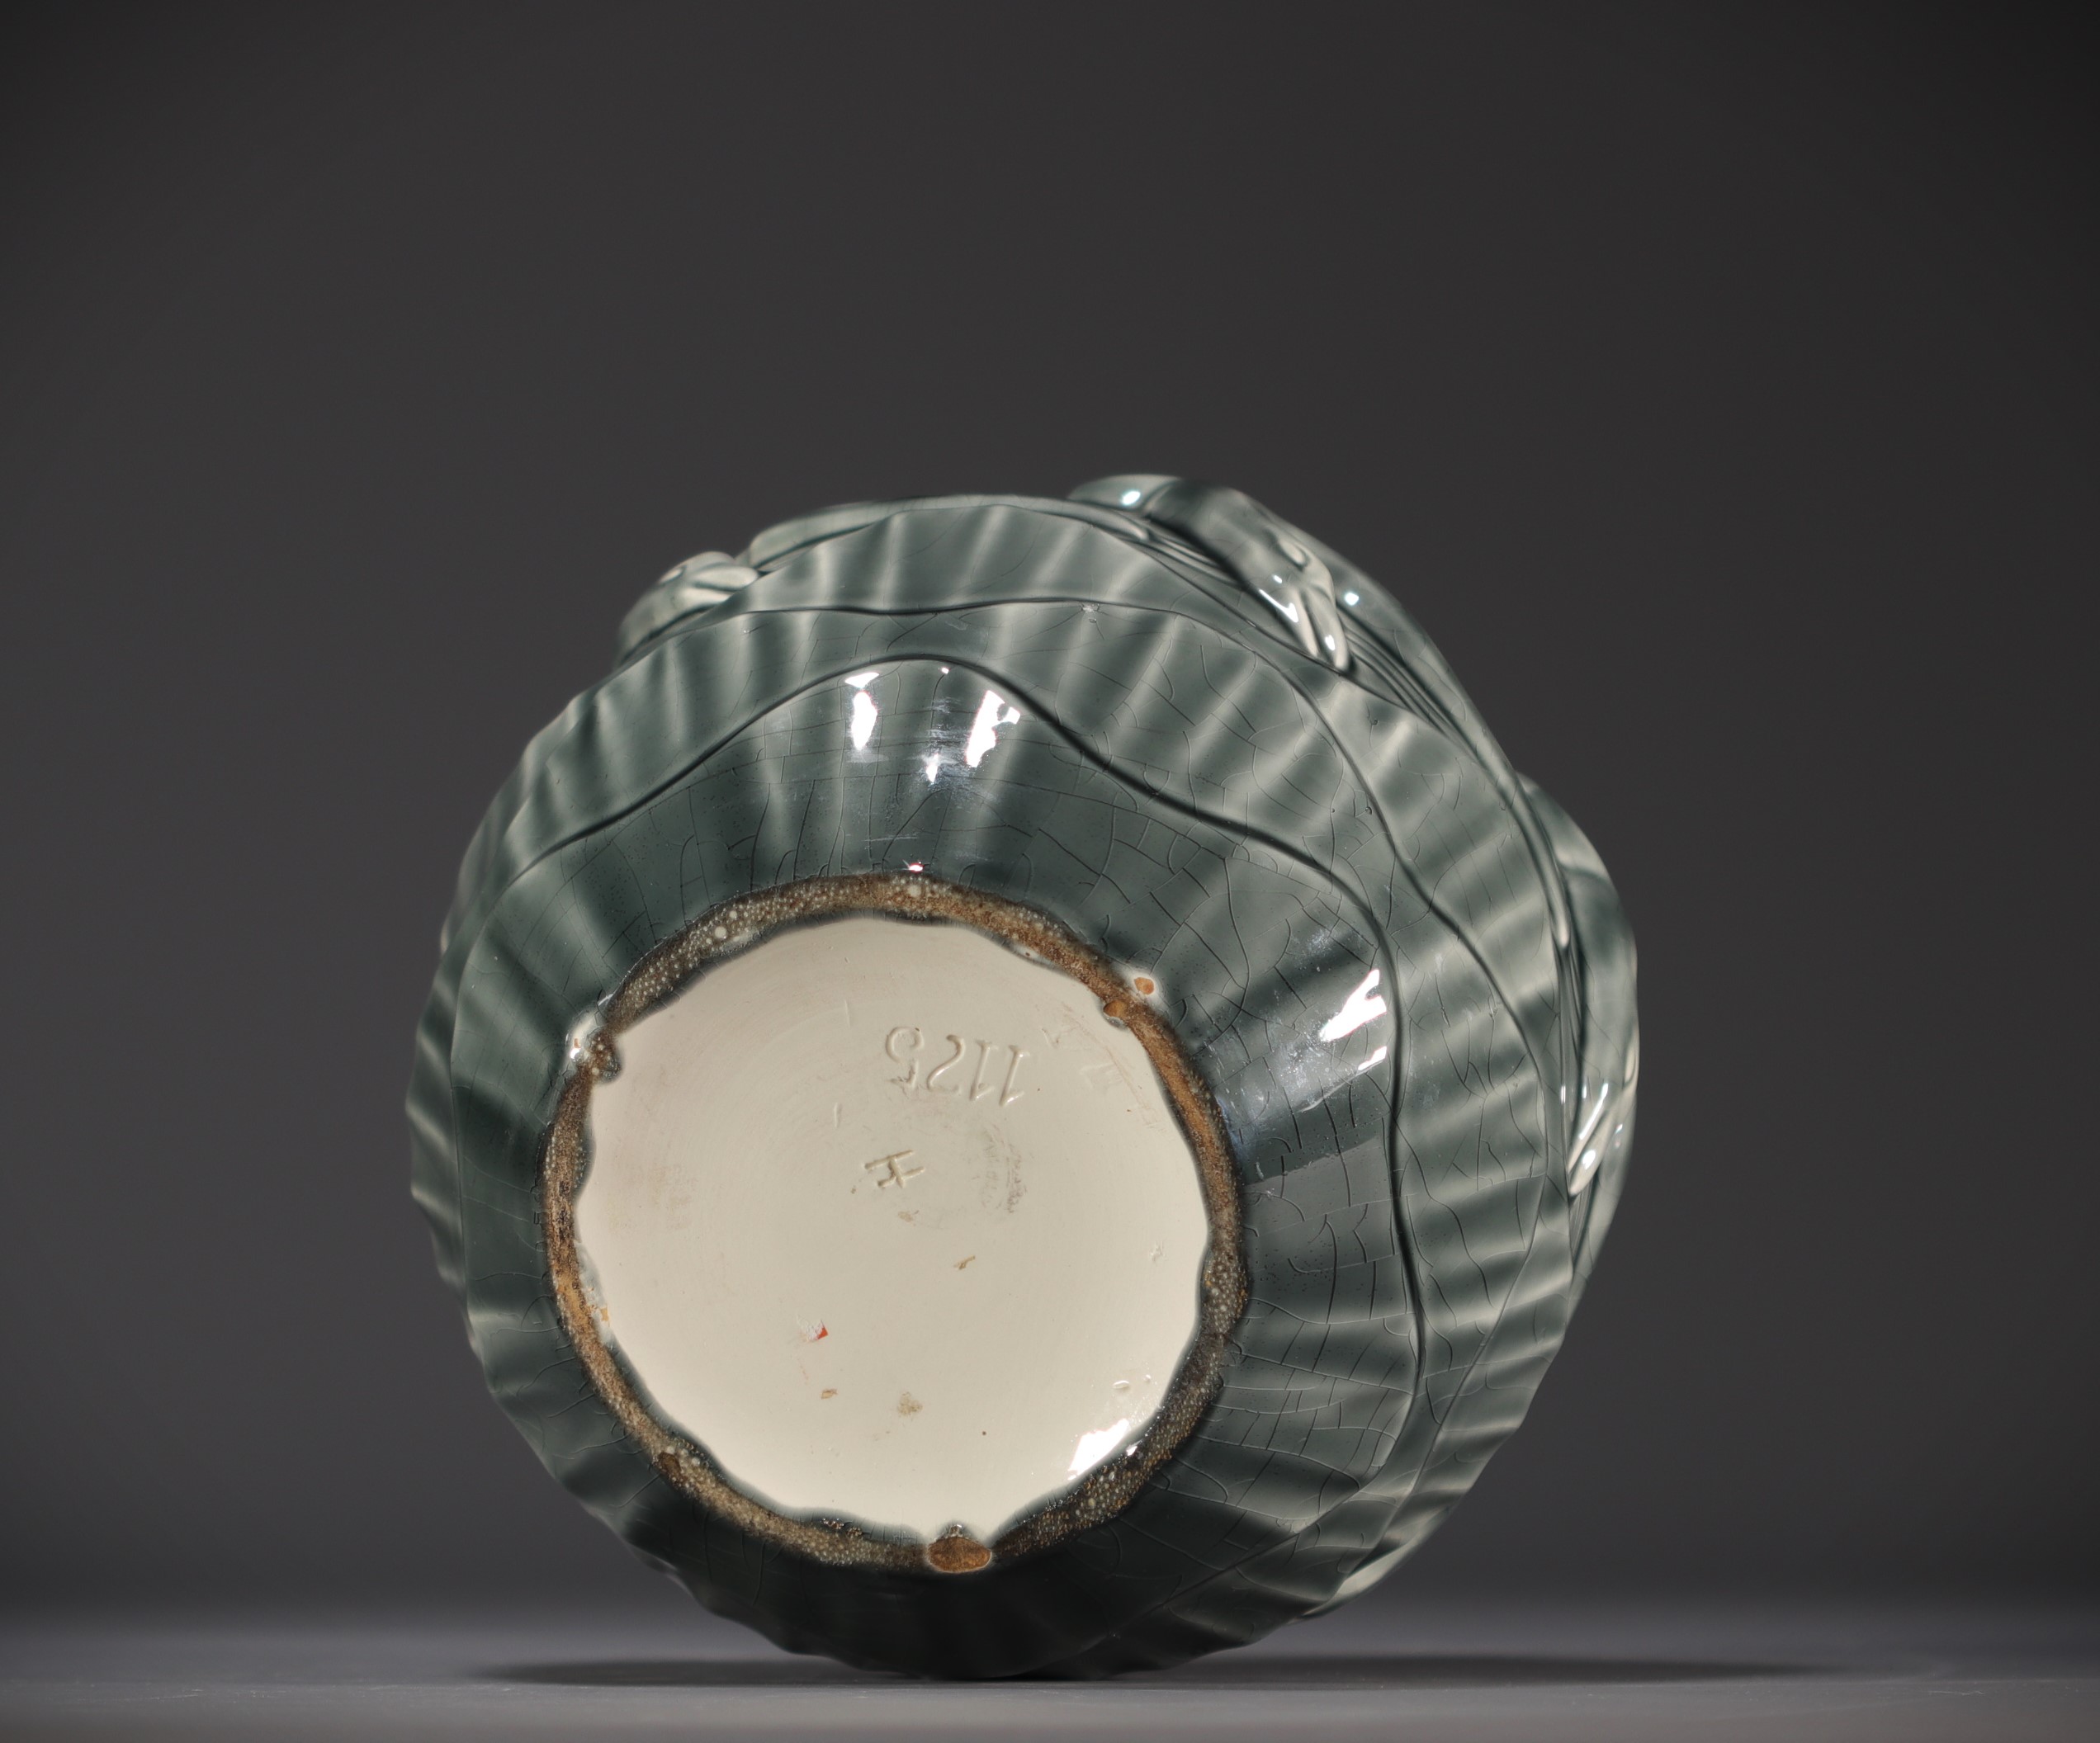 Charles CATTEAU (1880-1966), Crackled ceramic vase "aux mouettes", Boch KERAMIS. - Image 2 of 3